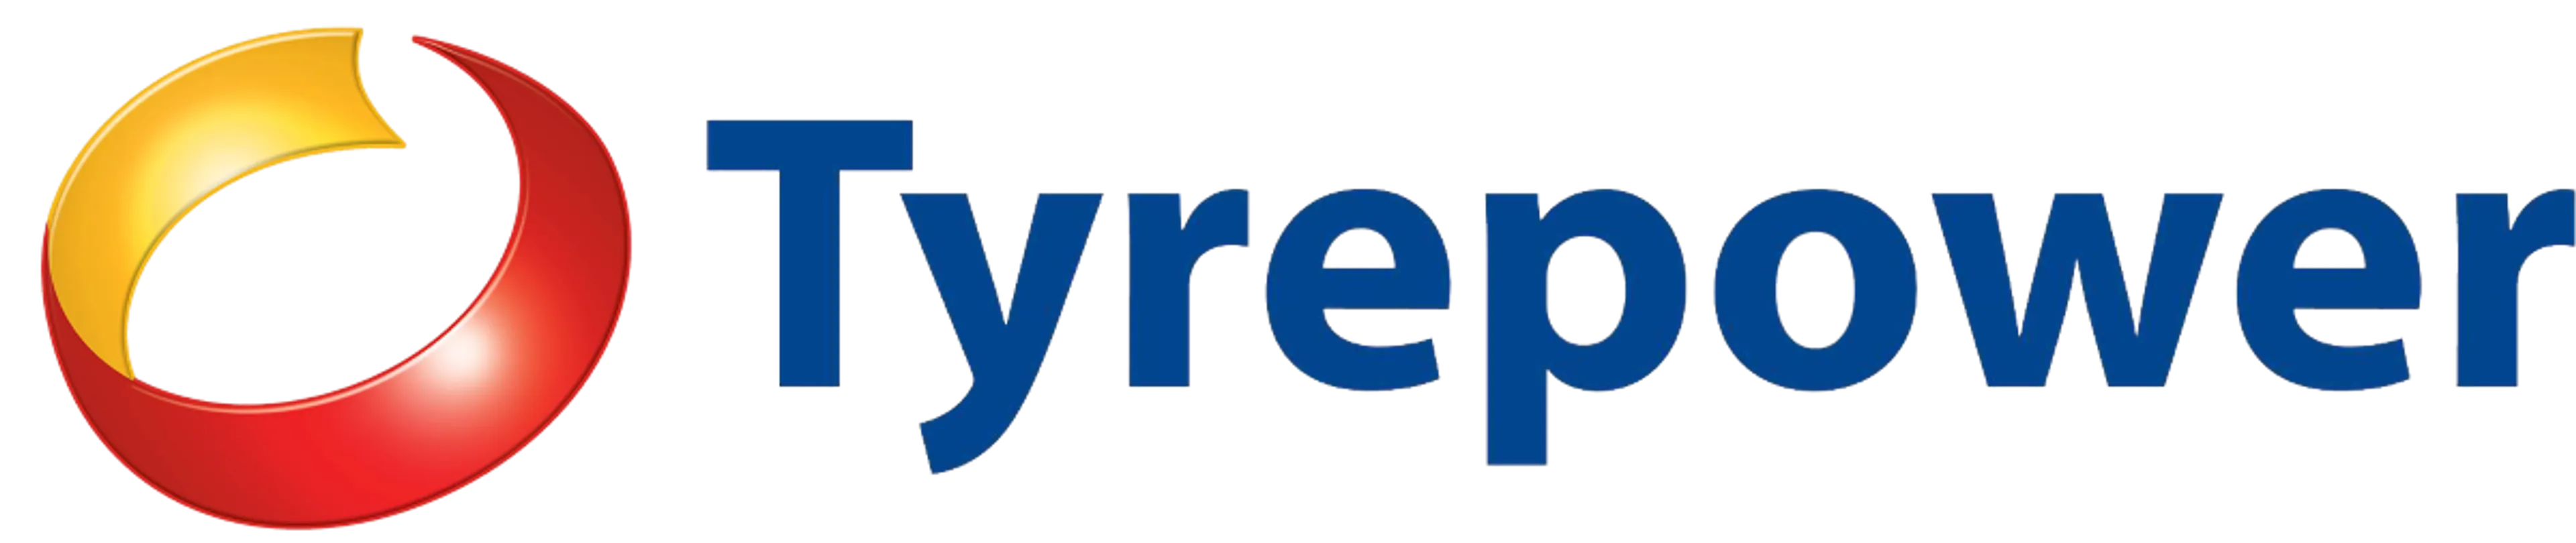 TYREPOWER logo